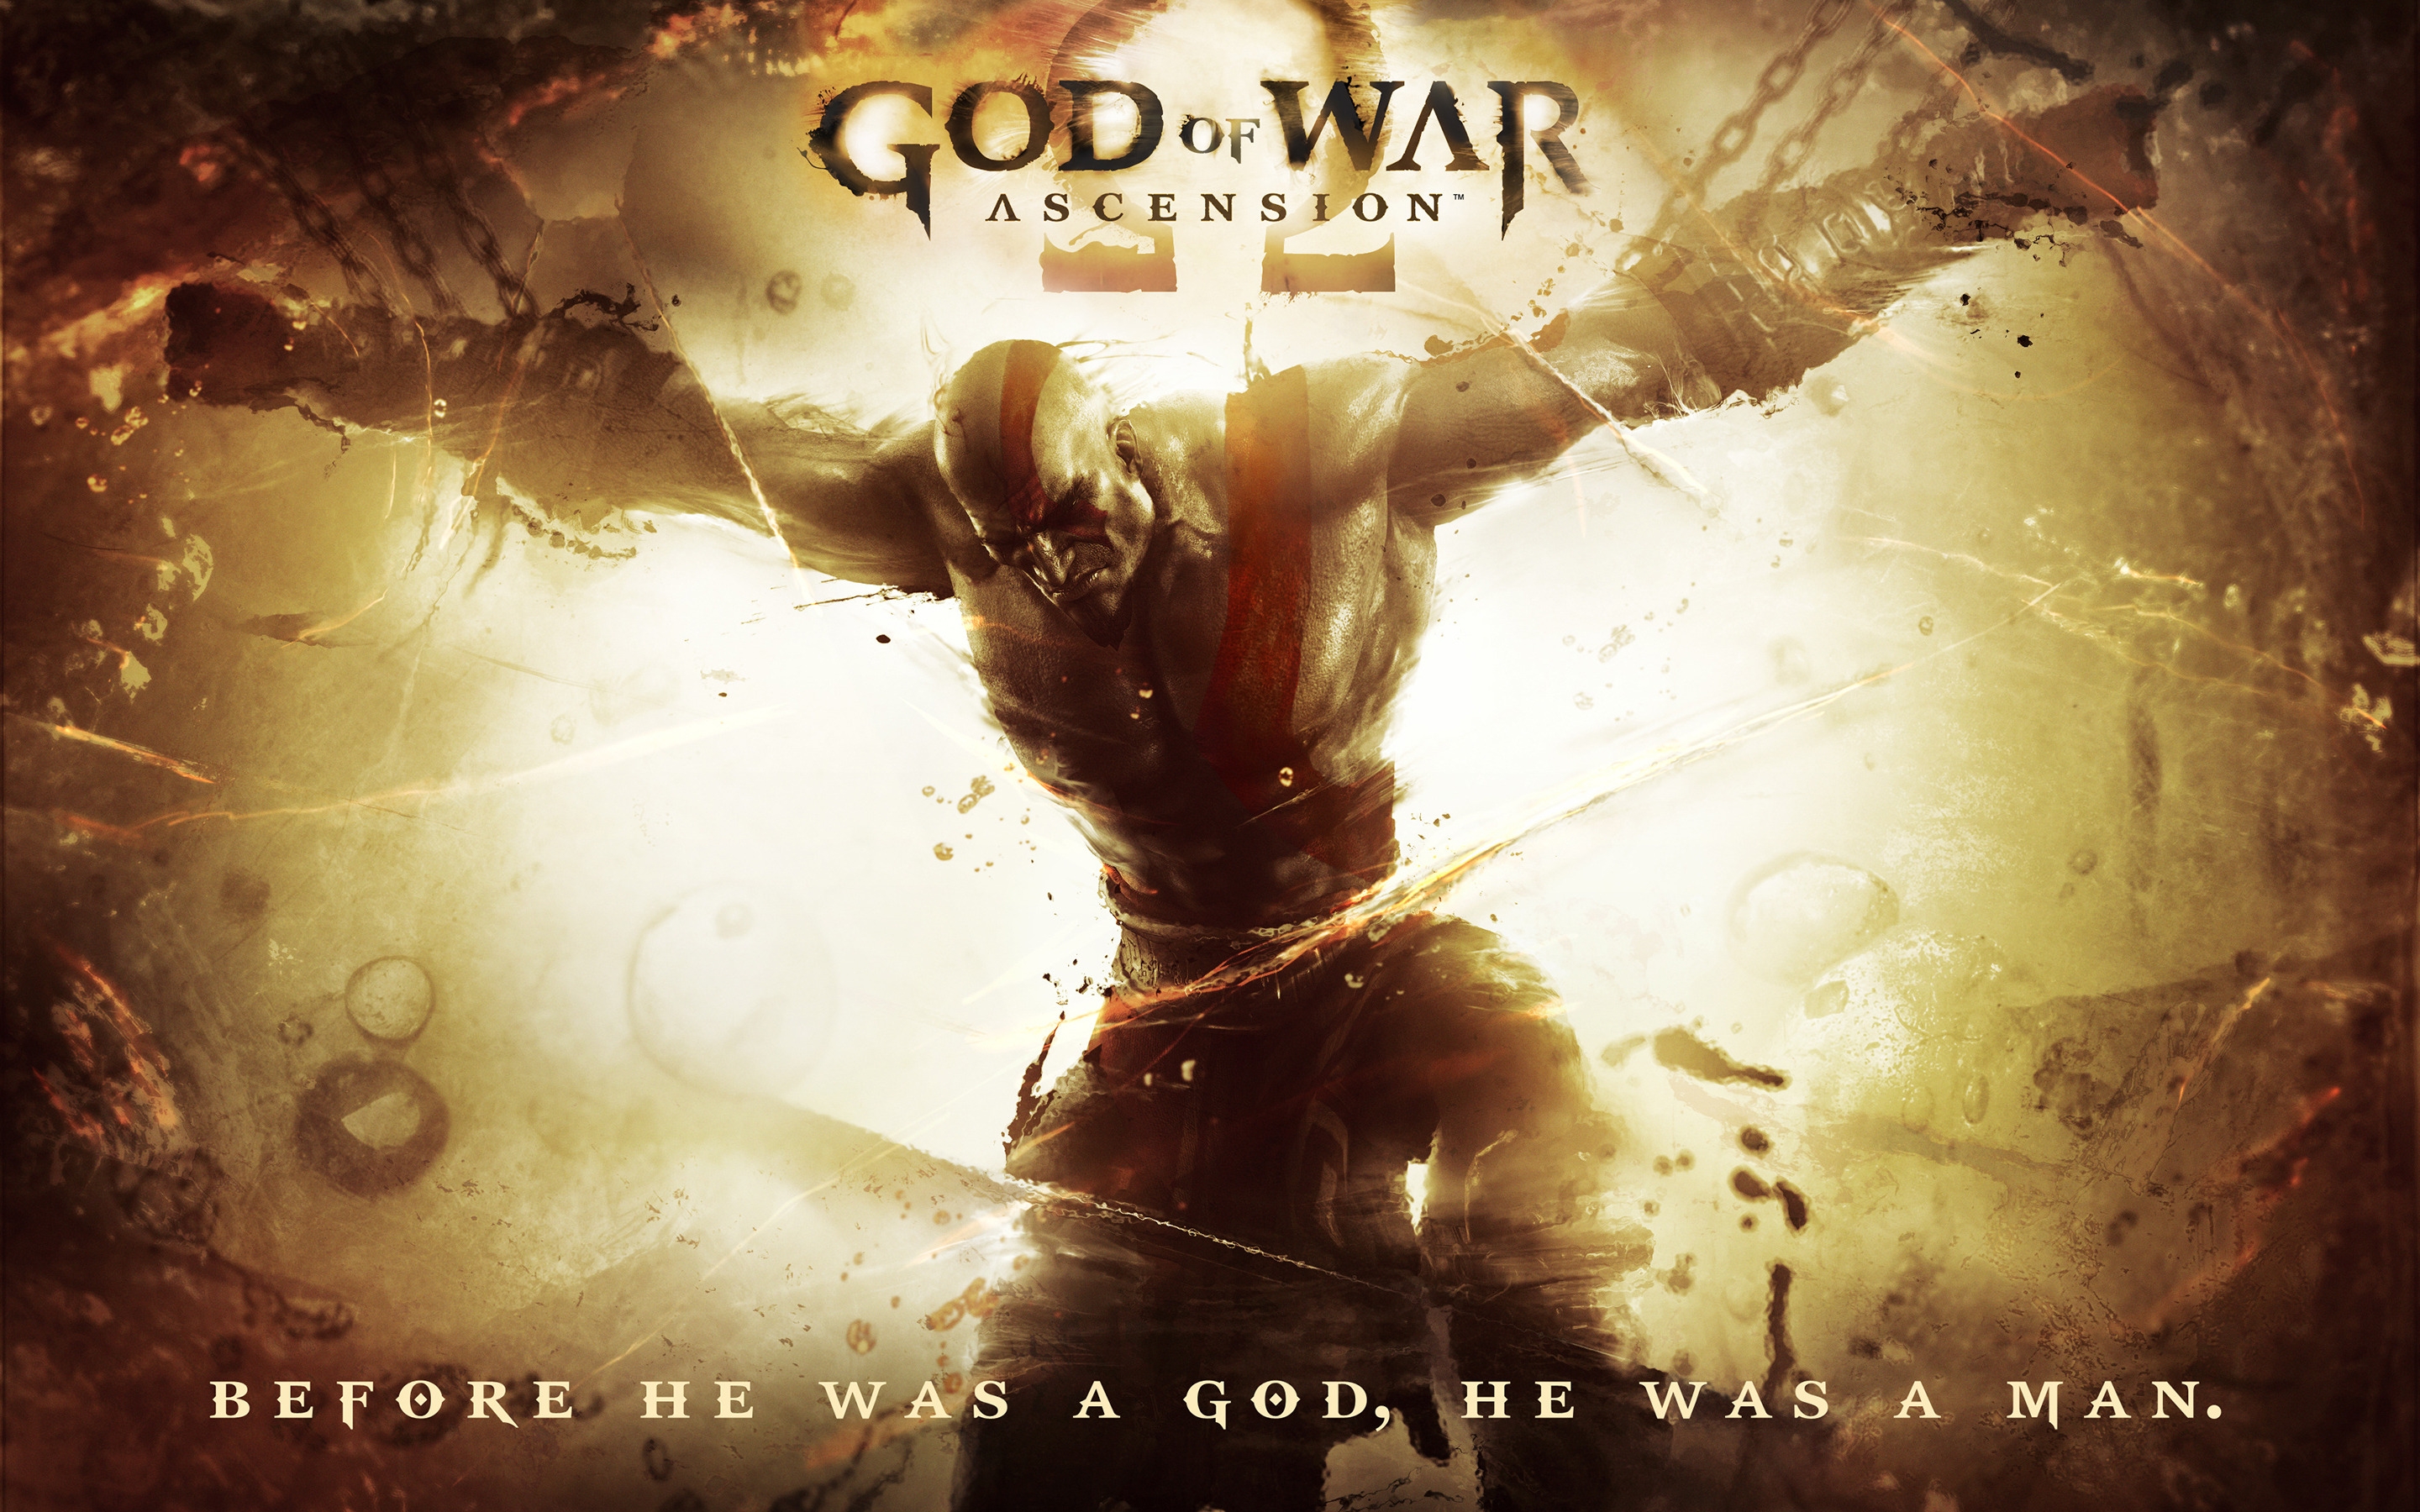 God of War Ascension 2013 for 2880 x 1800 Retina Display resolution